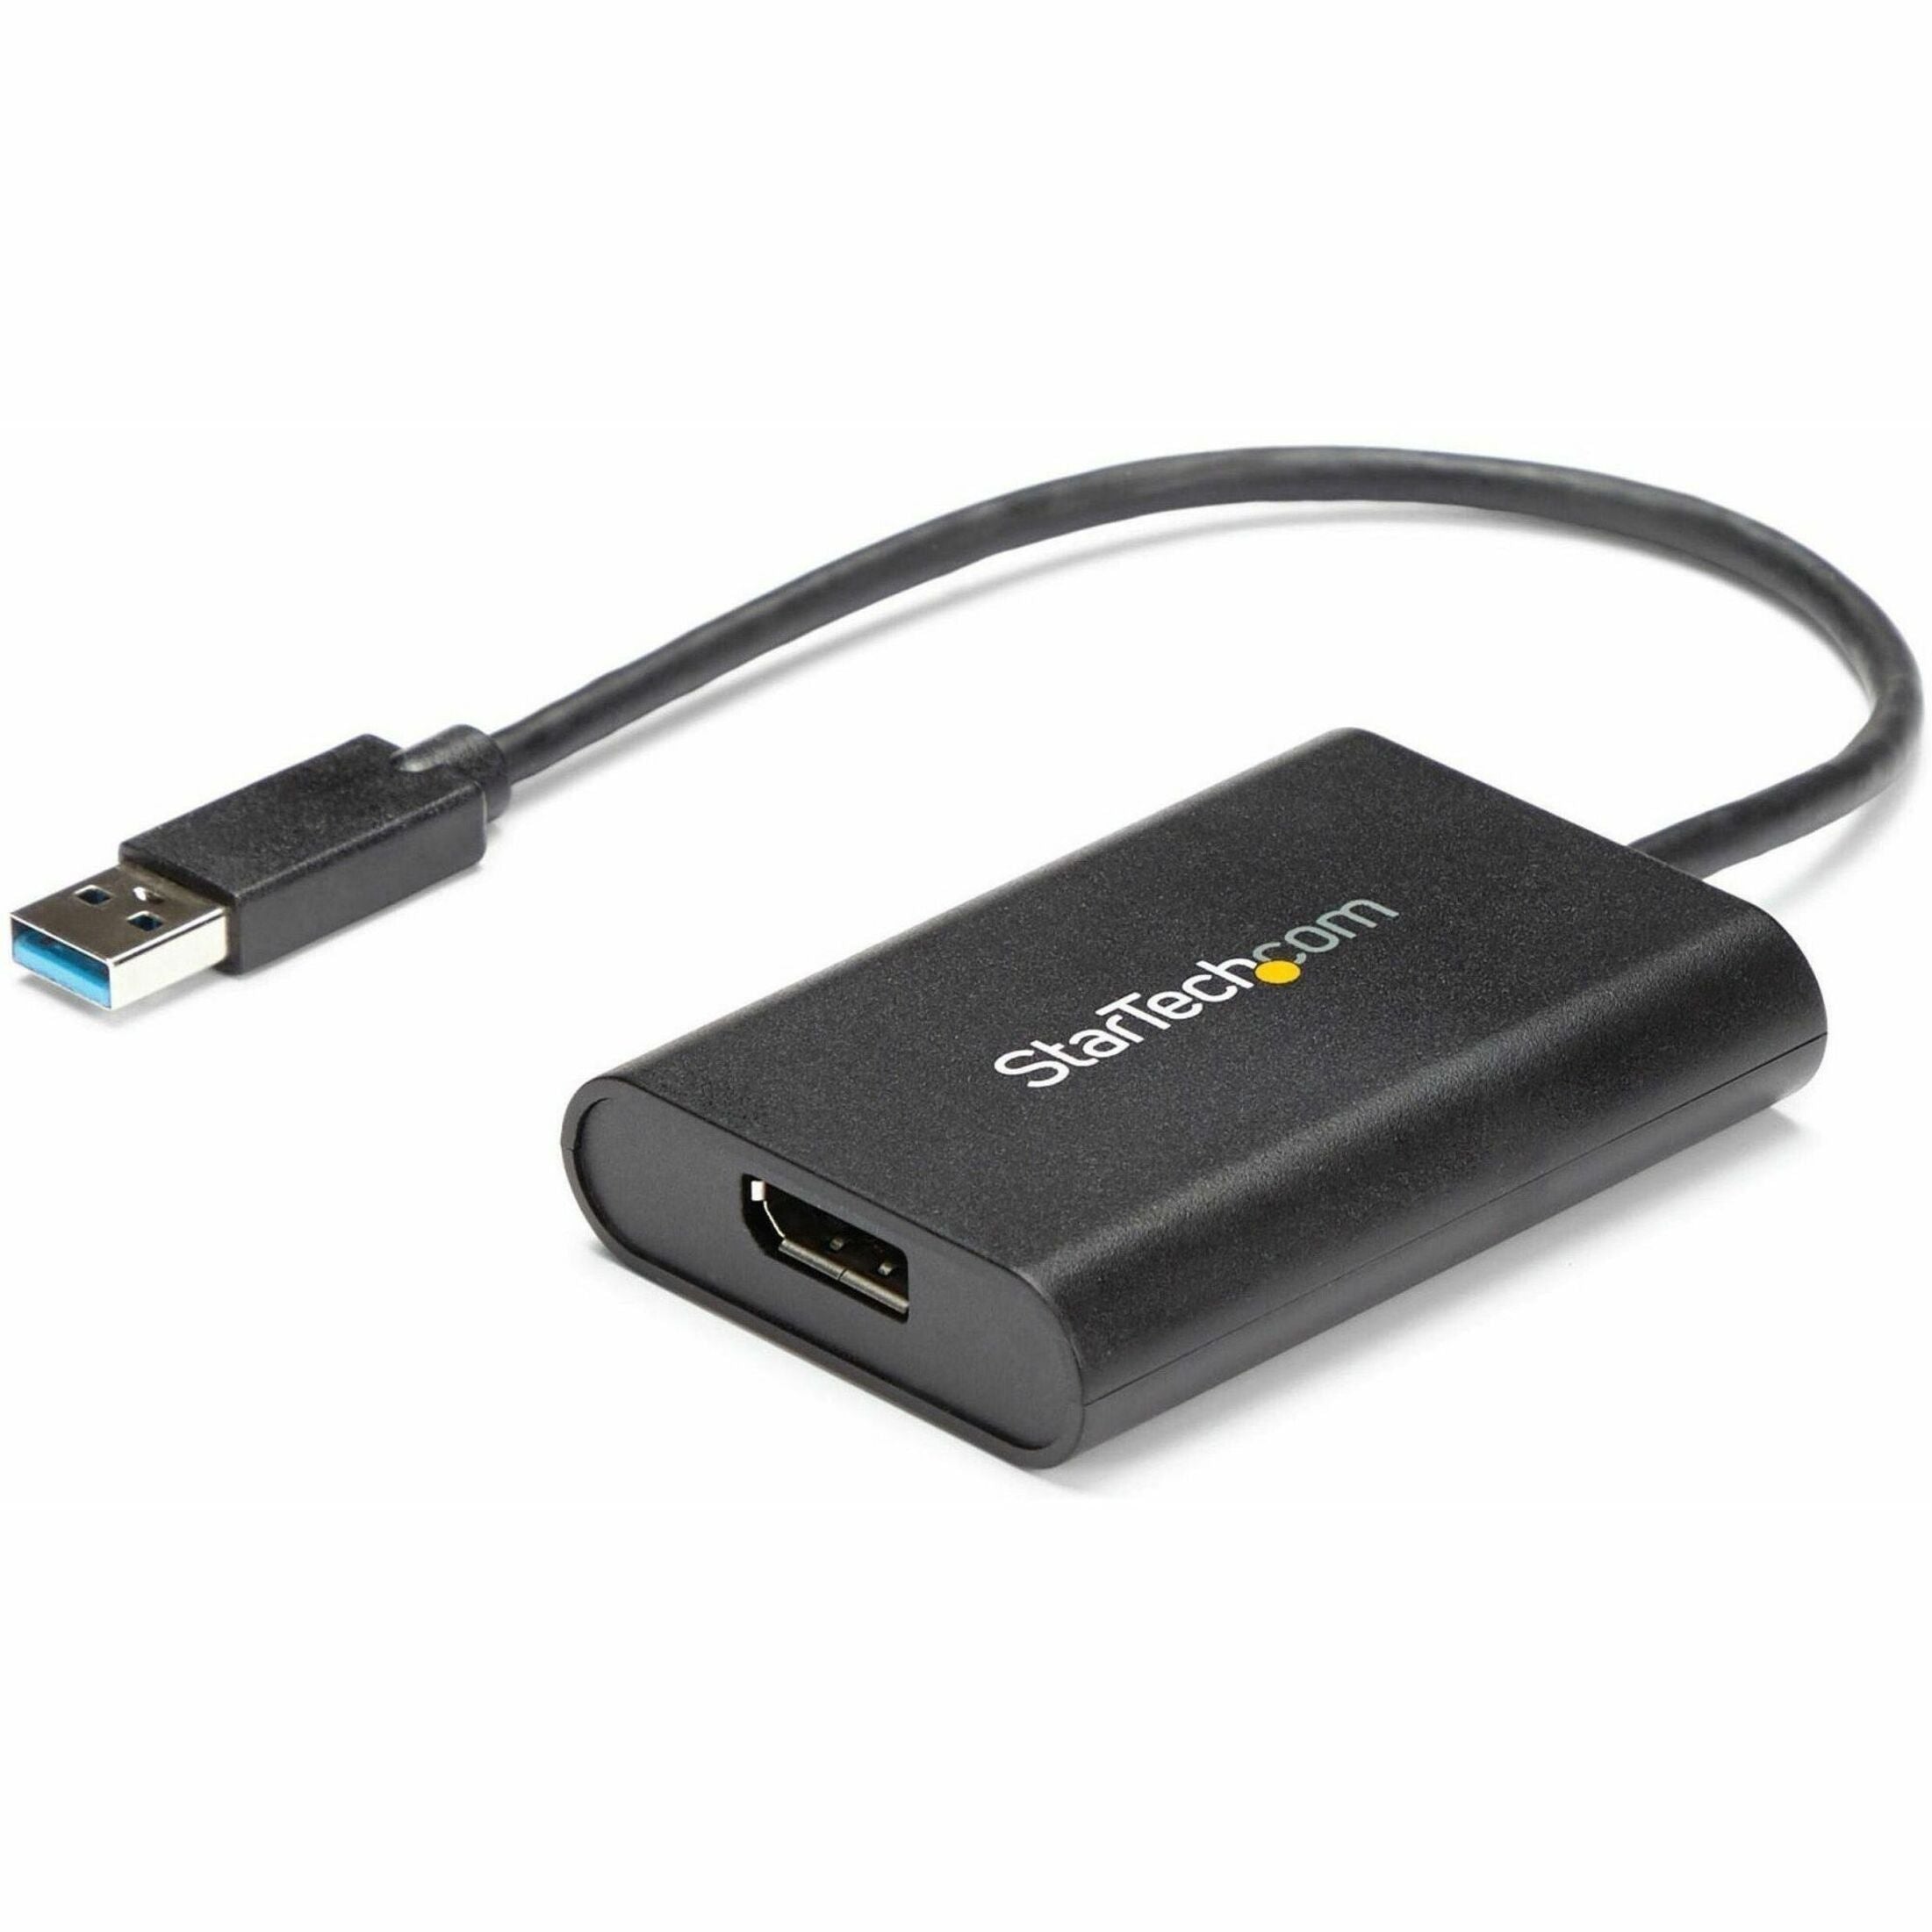 StarTech.com USB32DPES2 USB to DisplayPort Adapter - USB 3.0 - 4K 30Hz, Easy 4K Display Connection